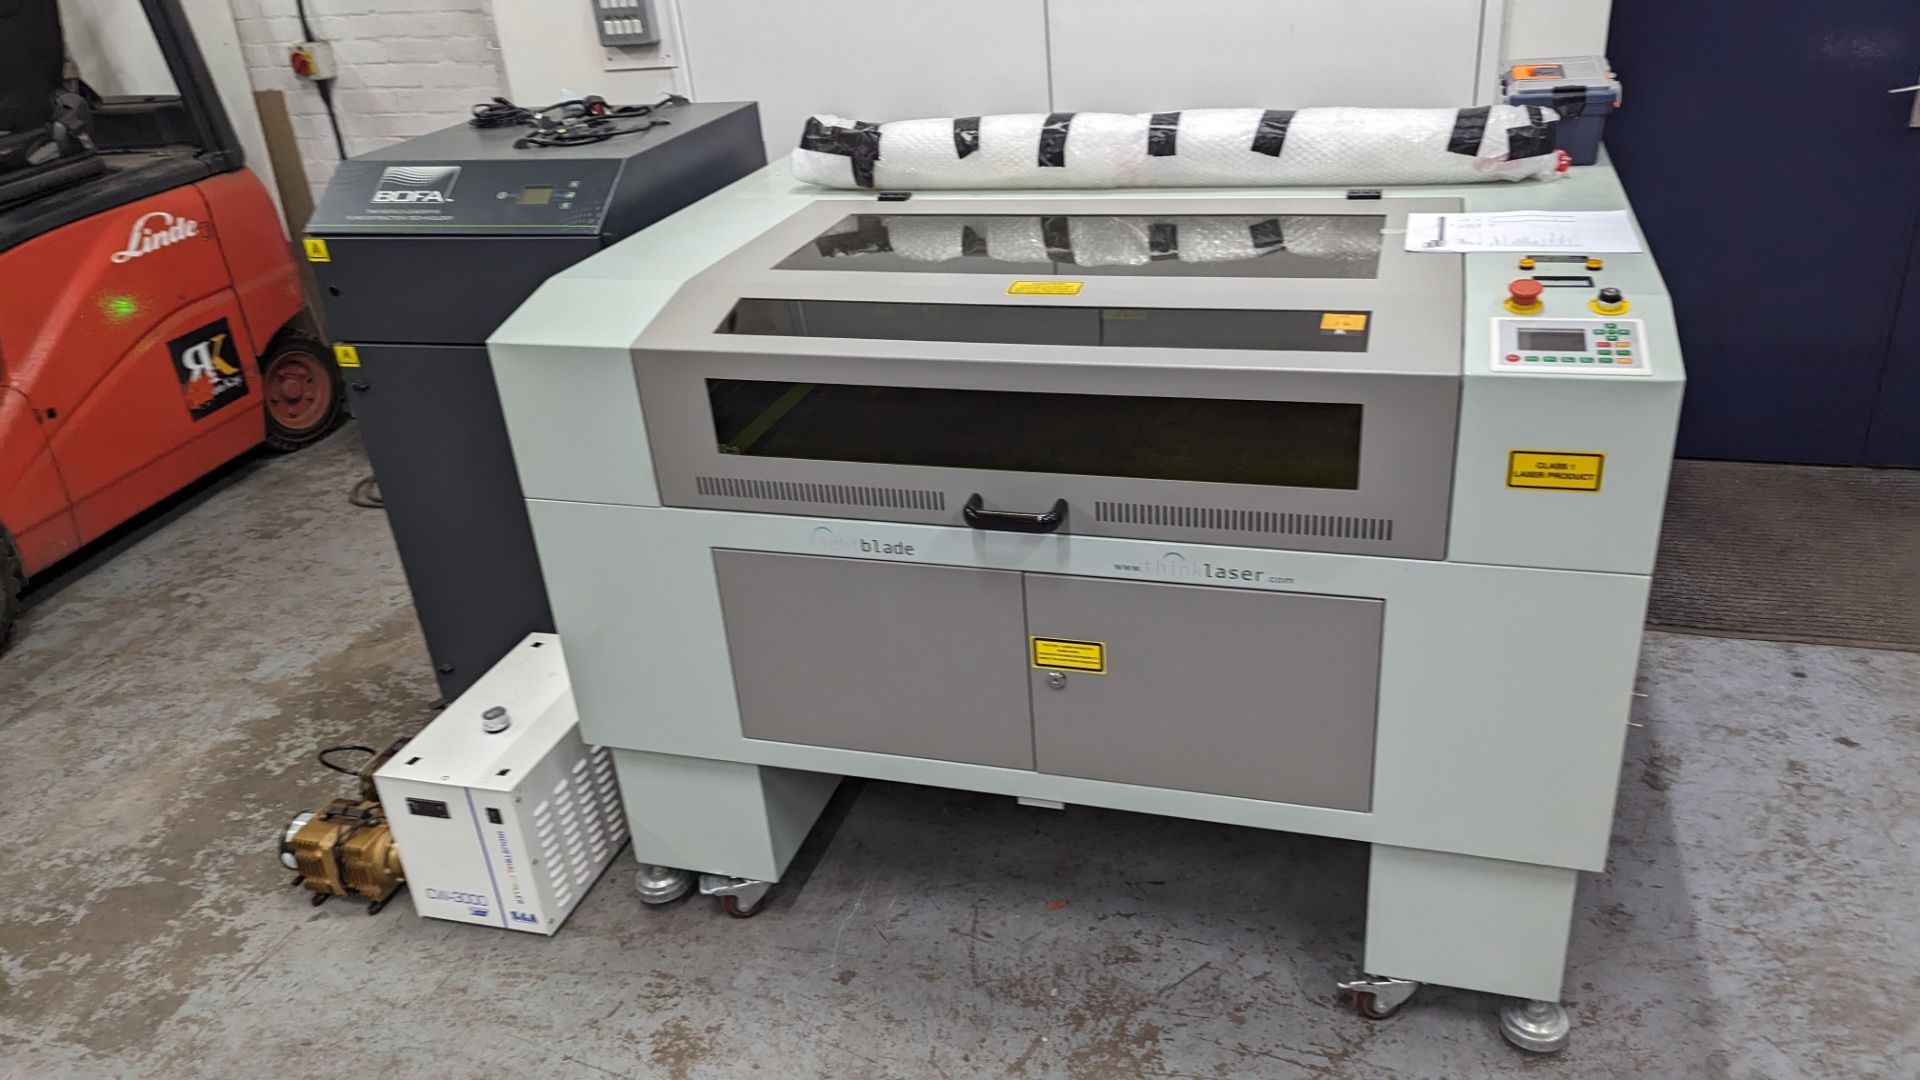 2021 Thinklaser Lightblade 6090 laser engraving machine including dedicated extraction system. - Image 8 of 49